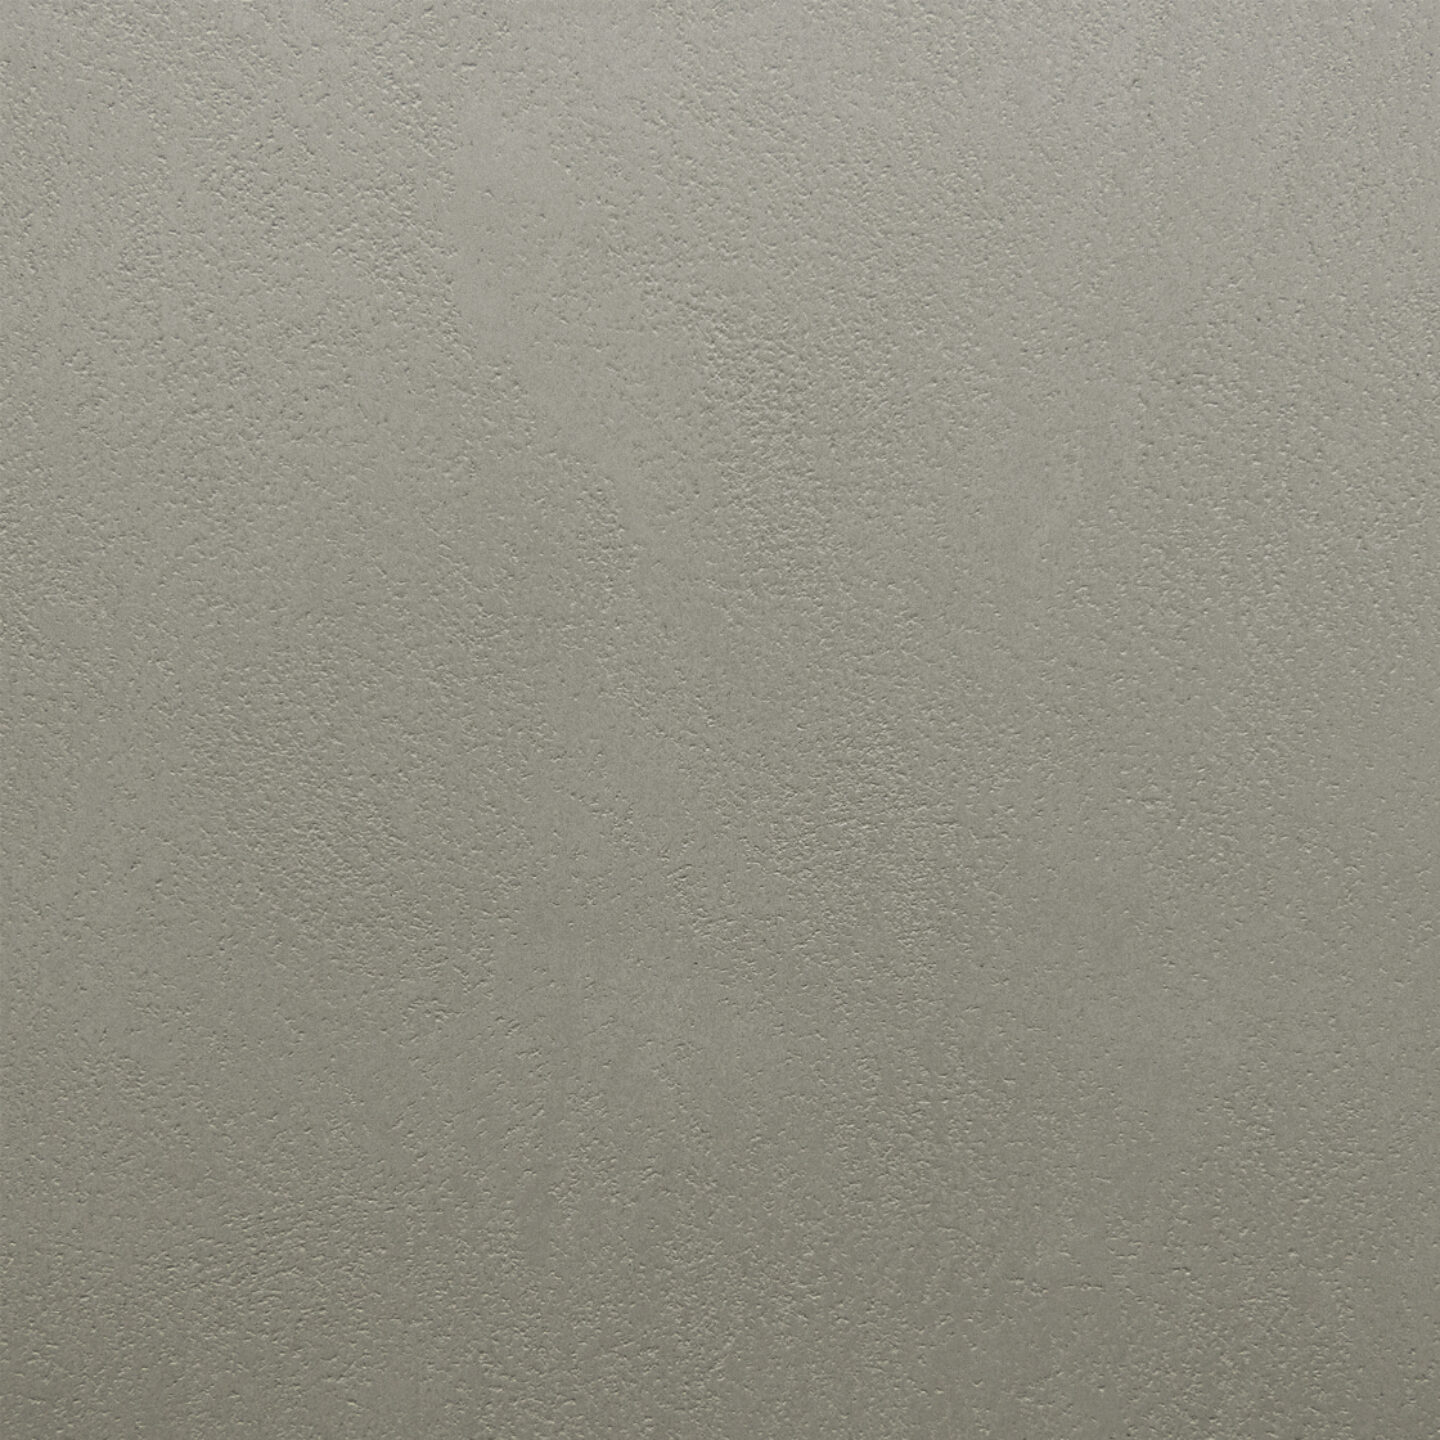 Close up of Armourcoat leatherstone exterior polished plaster finish - 15